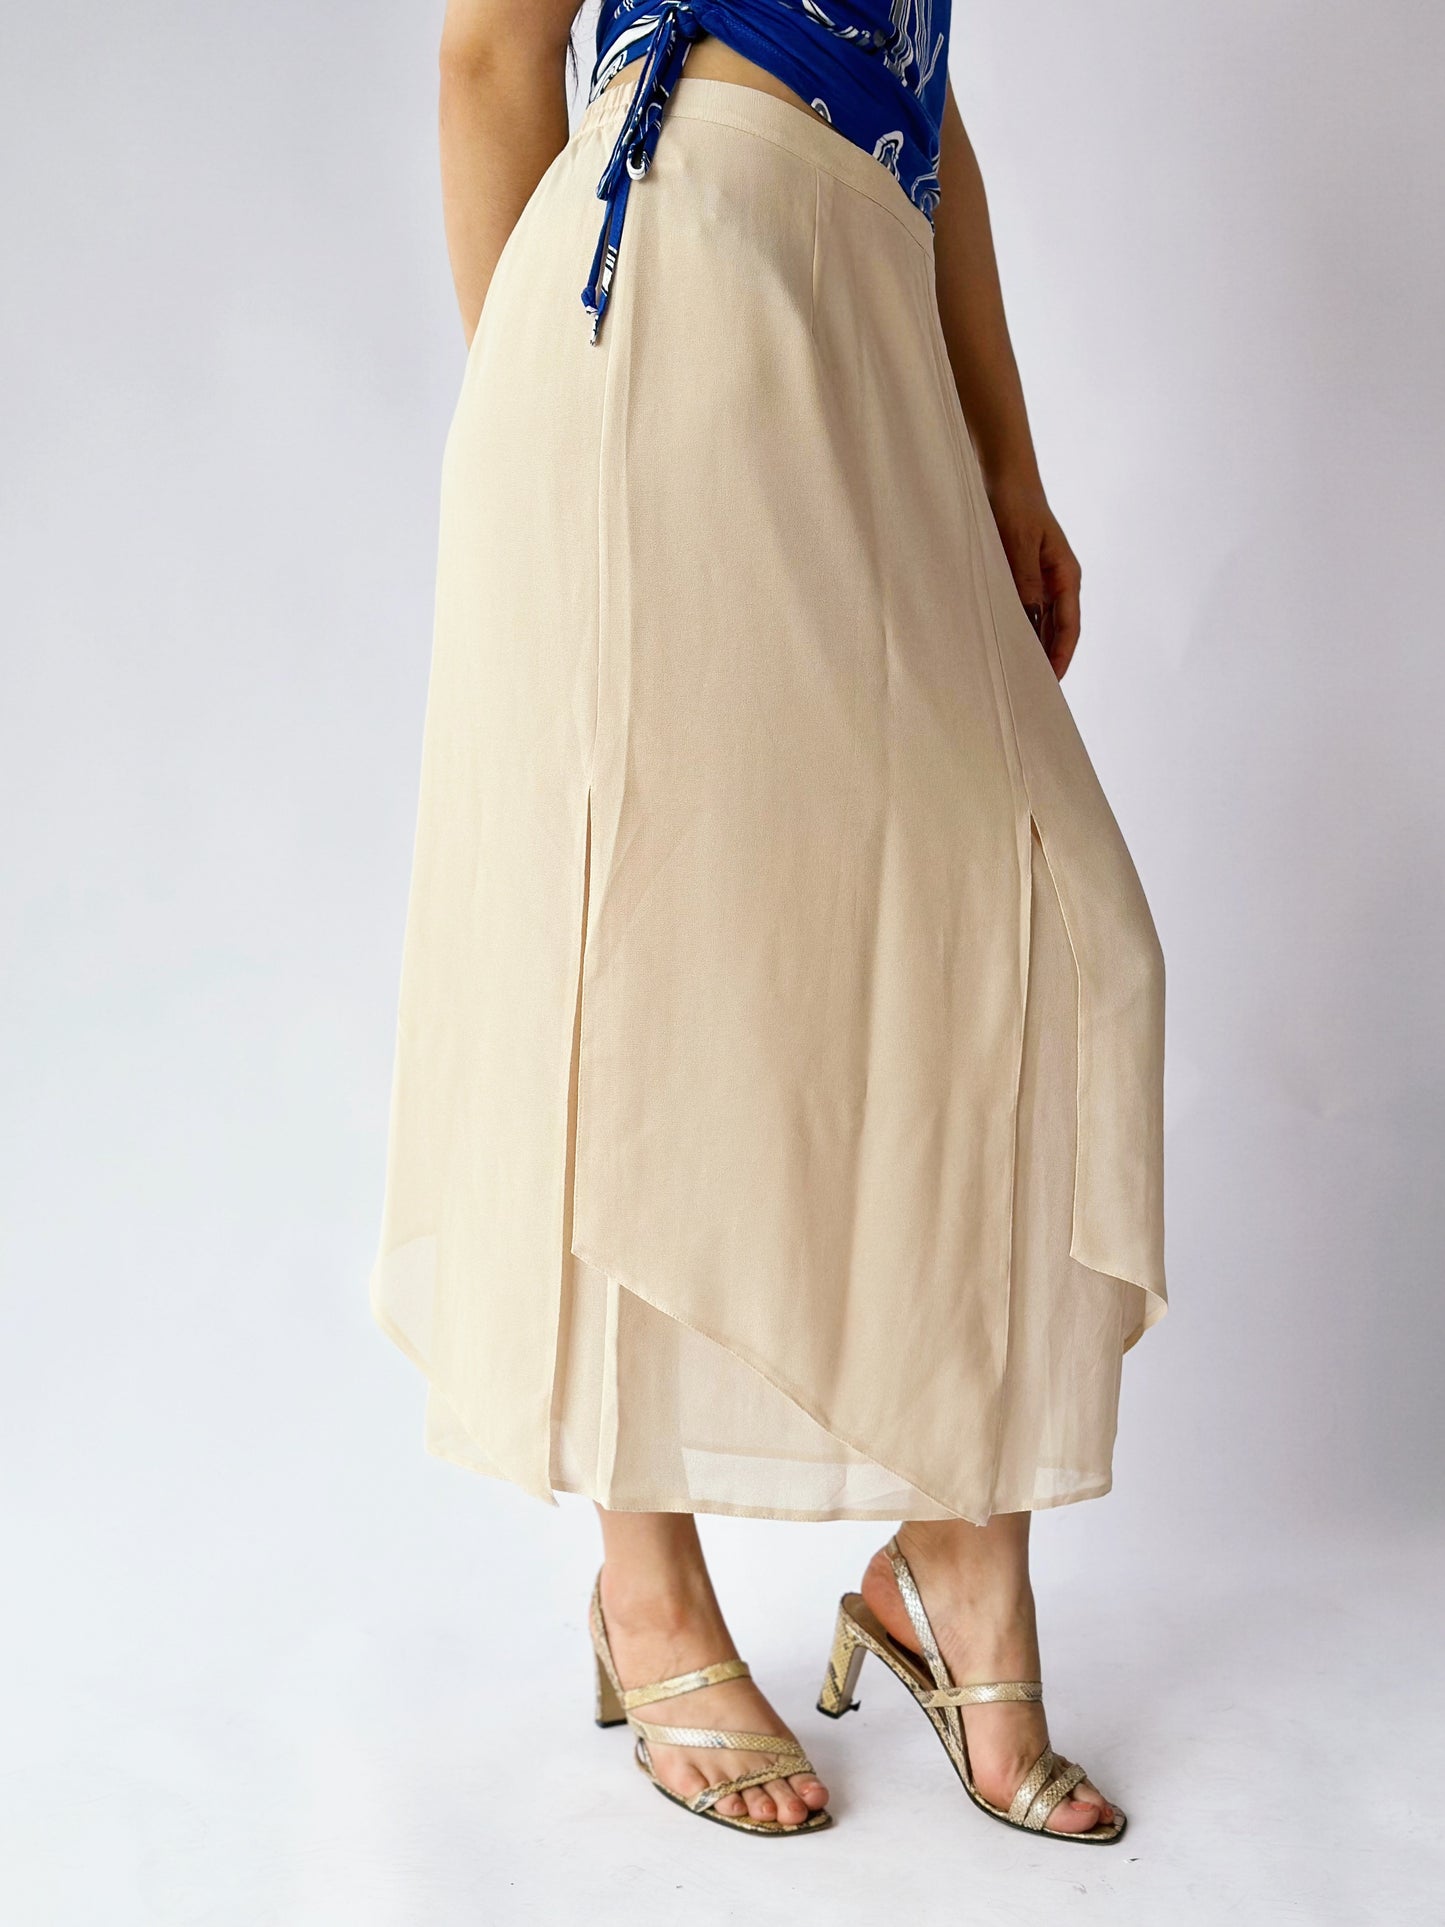 Layered Skirt [L]